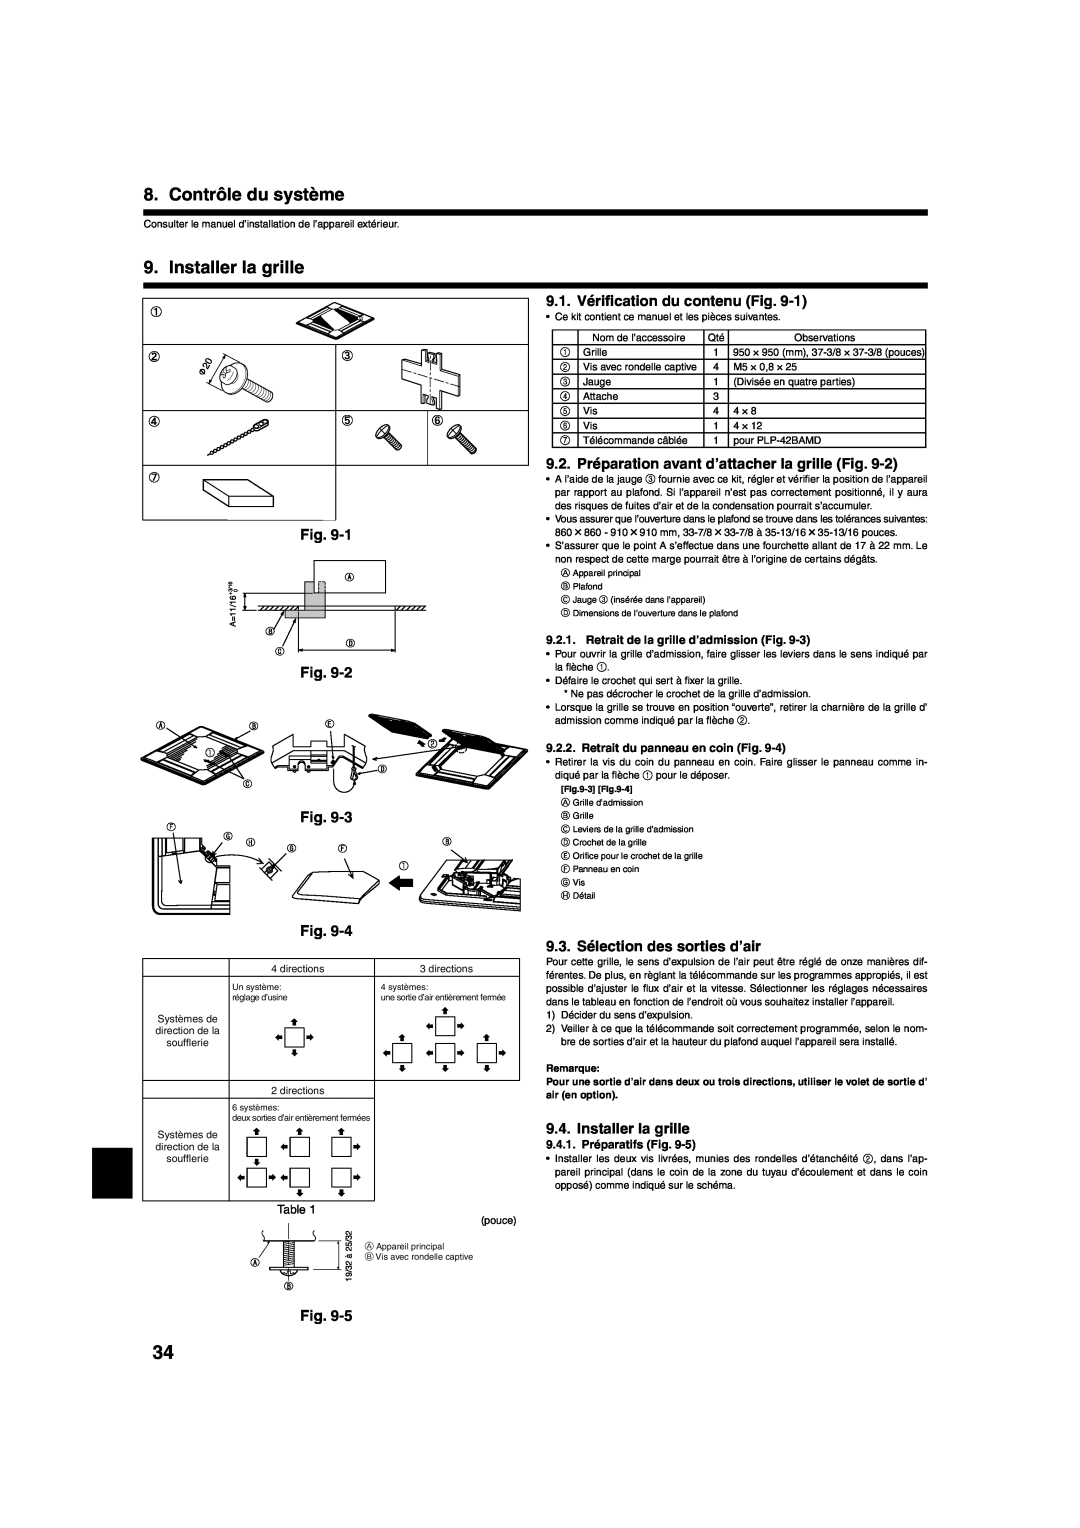 Mitsumi electronic PLA-ABA Contrôle du système, Installer la grille, 9.1. Vériﬁcation du contenu Fig, Fig. Fig 